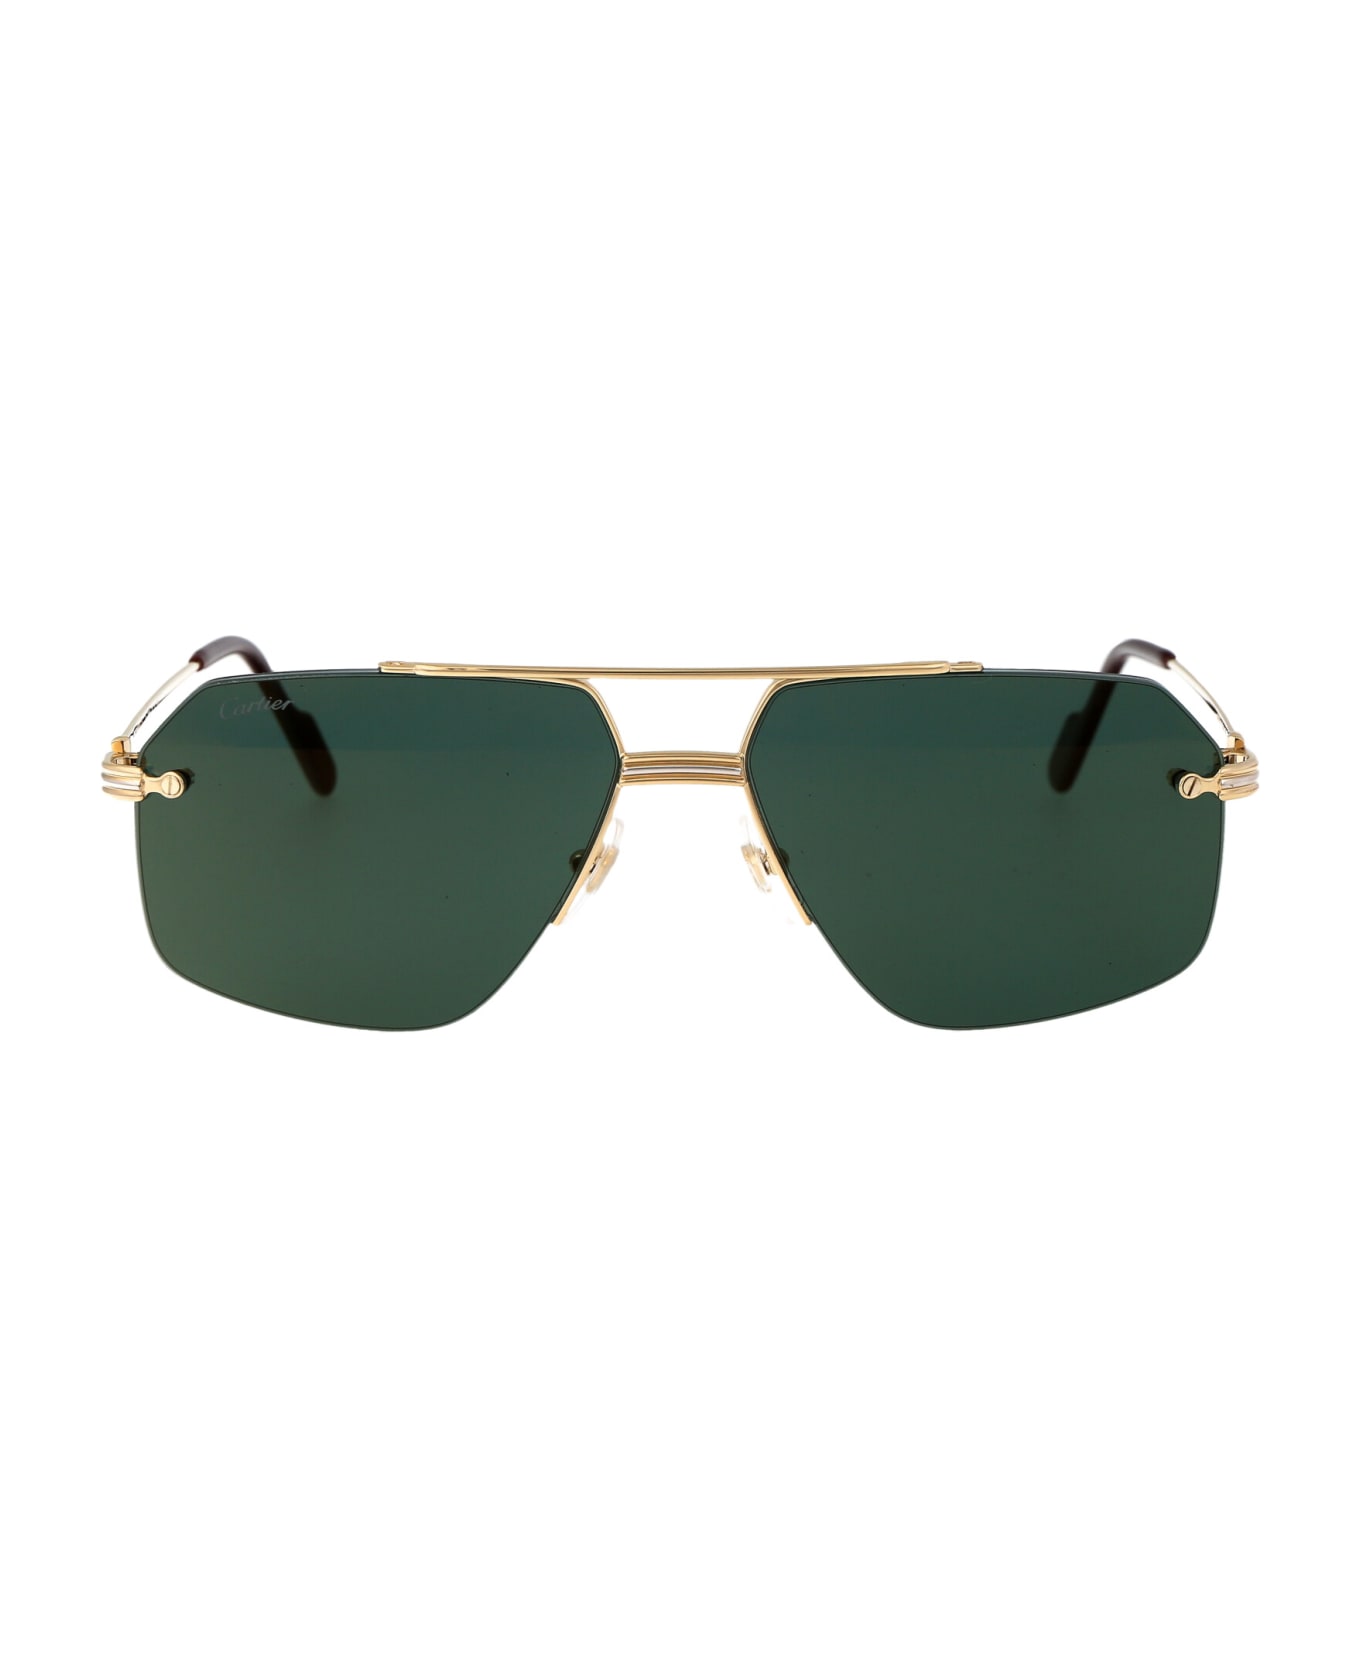 Cartier Eyewear Ct0426s Sunglasses - 002 GOLD GOLD GREEN サングラス